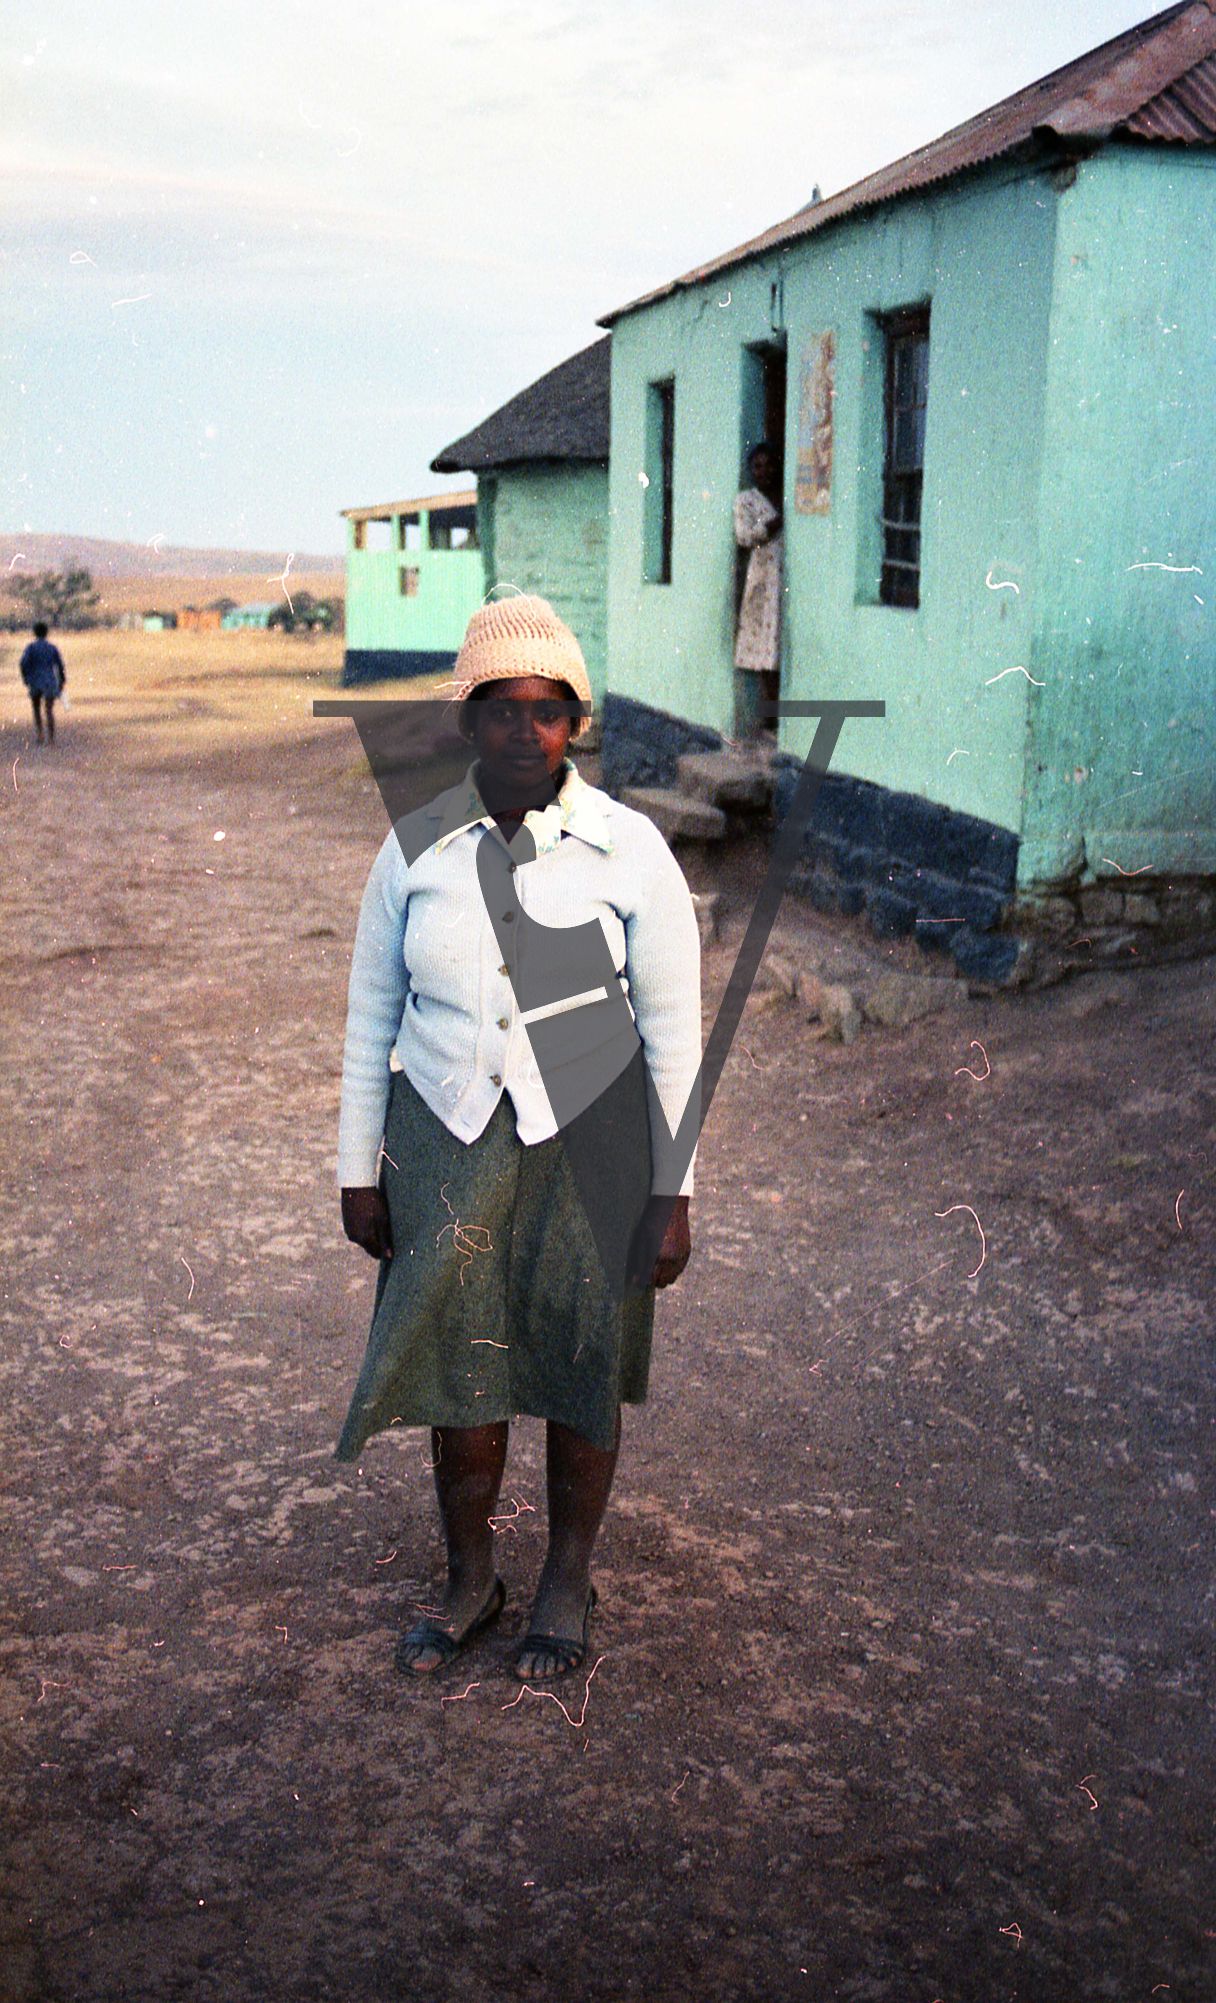 South Africa, Transkei, woman, uRonta, traditional Xhosa hut, full shot, portrait.